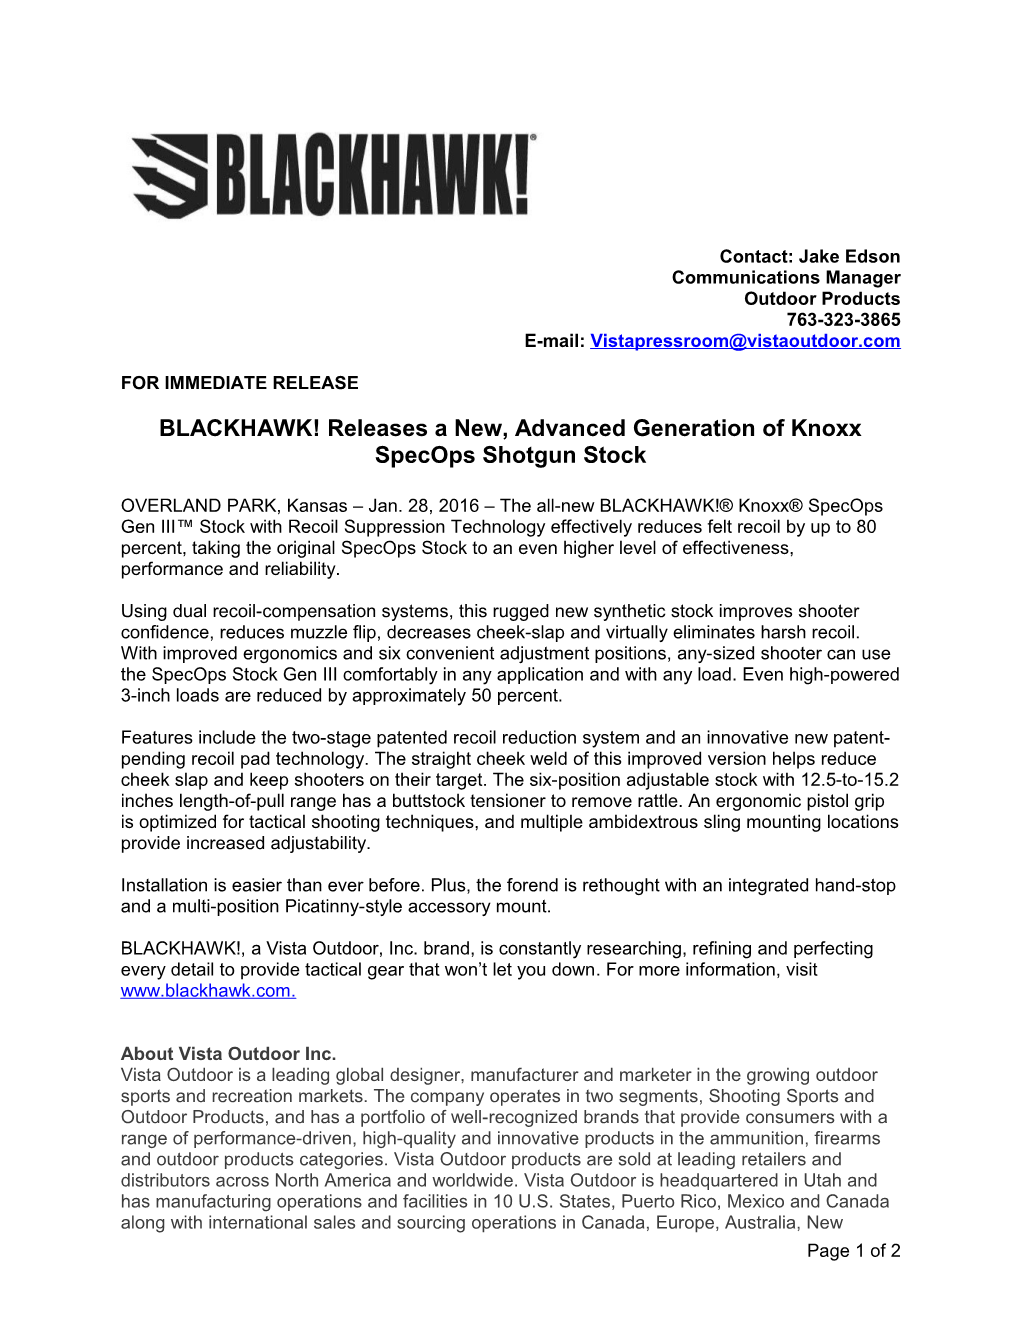 BLACKHAWK! Releases a New, Advanced Generation of Knoxx Specops Shotgun Stock